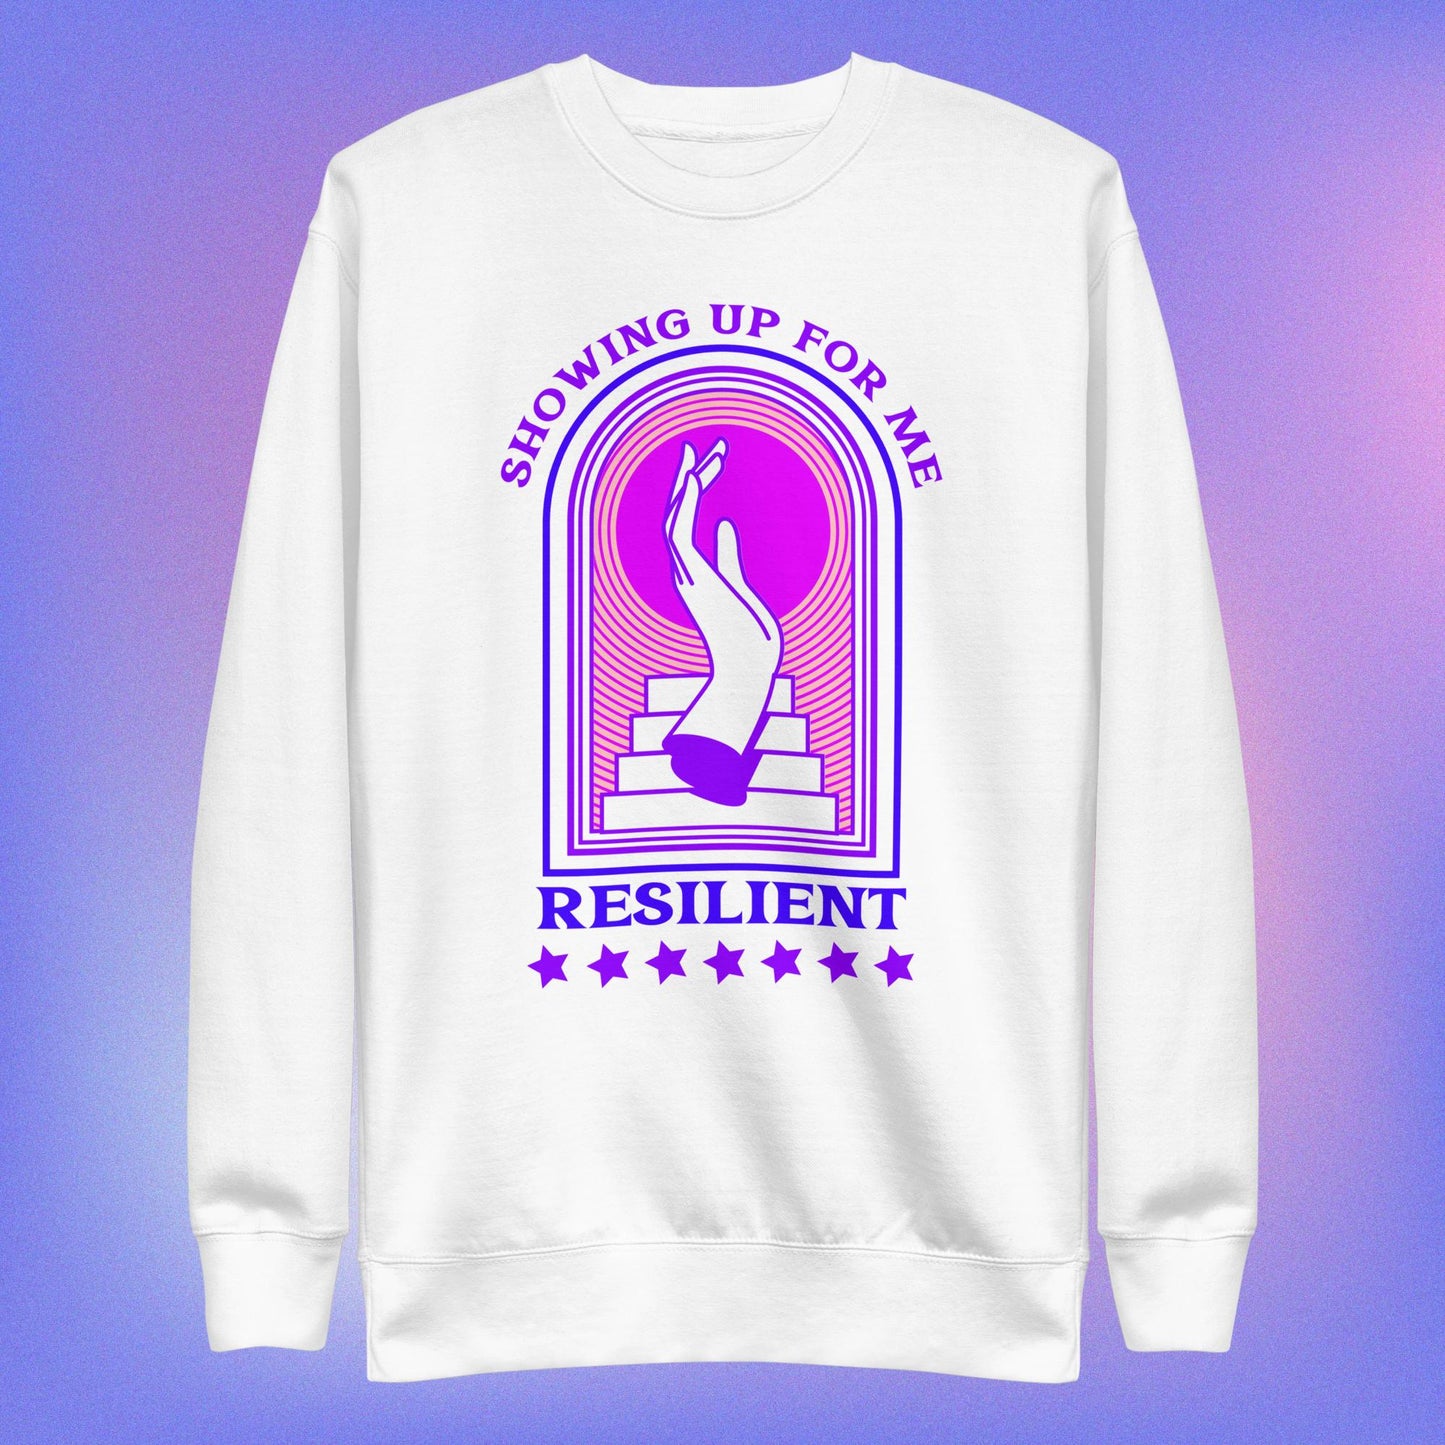 Showing Up Resilient: Unisex Premium Sweatshirt